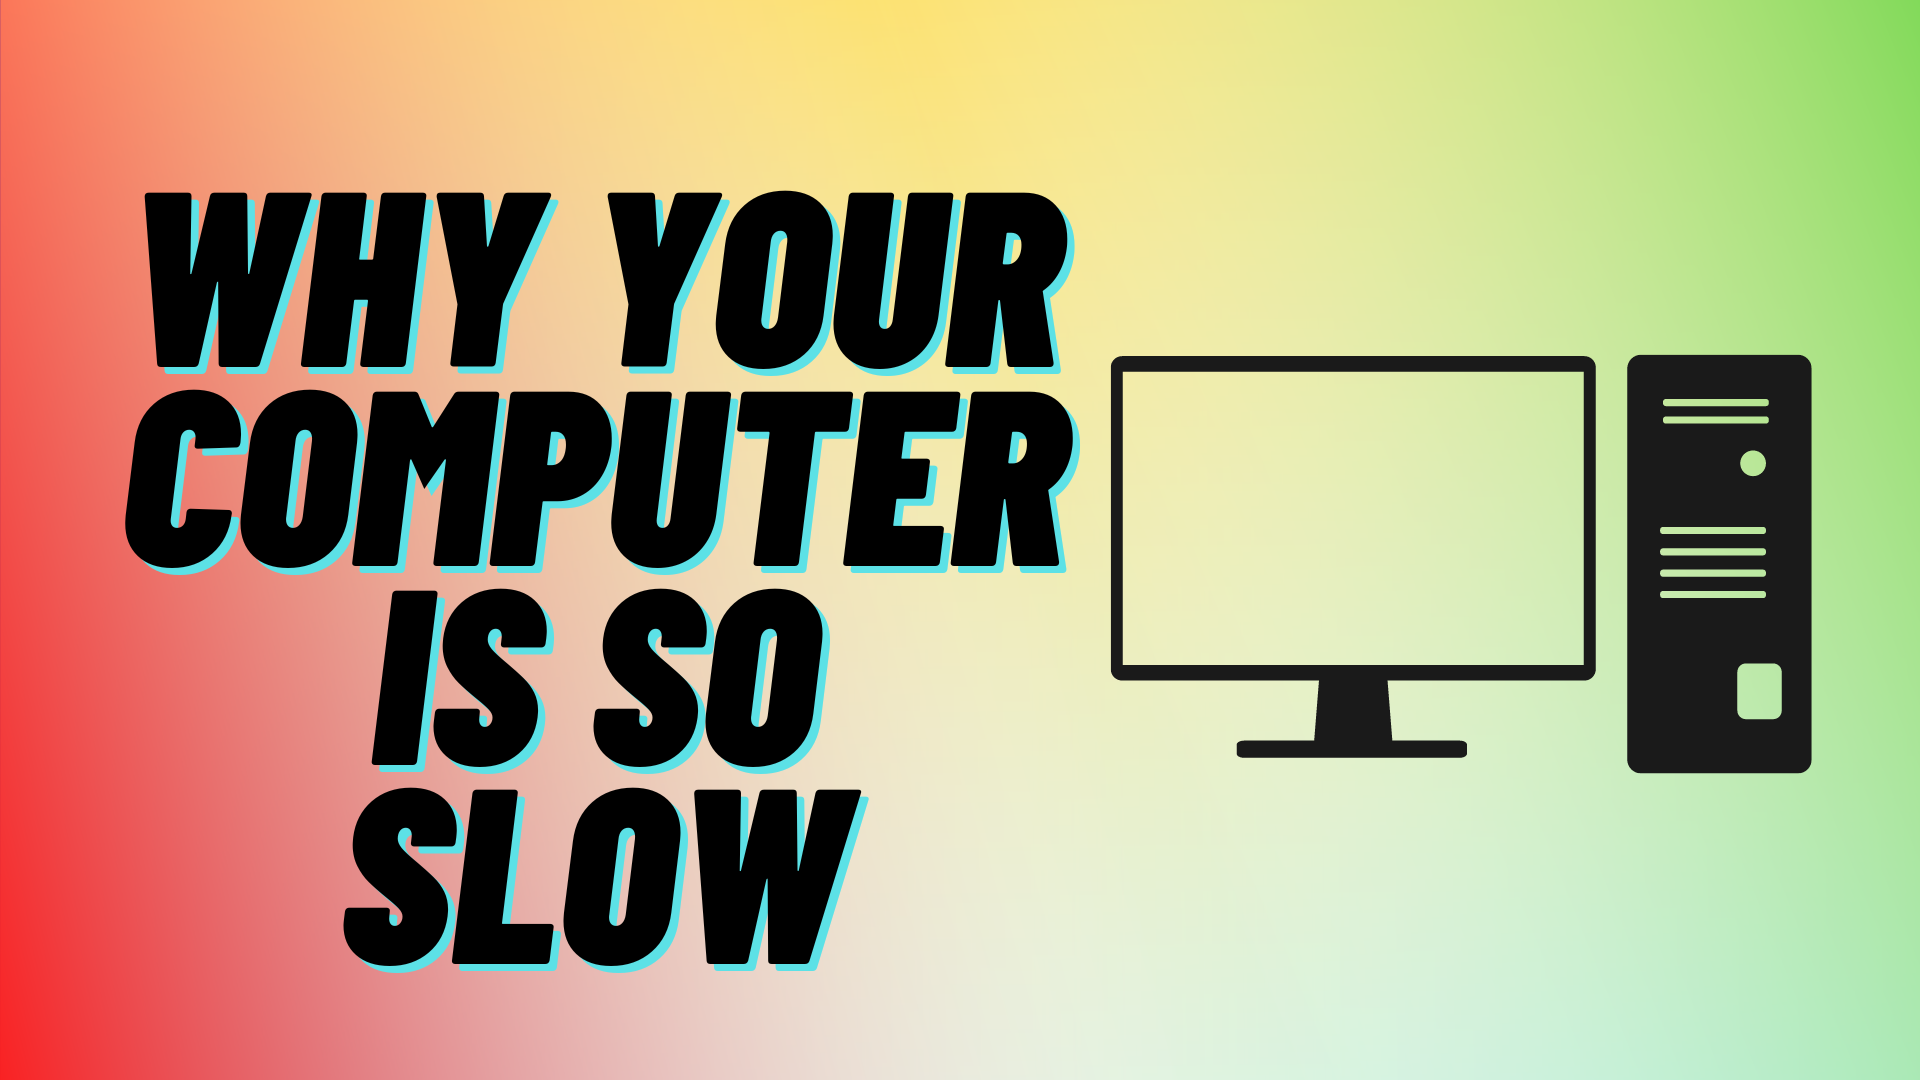 Computer is slow